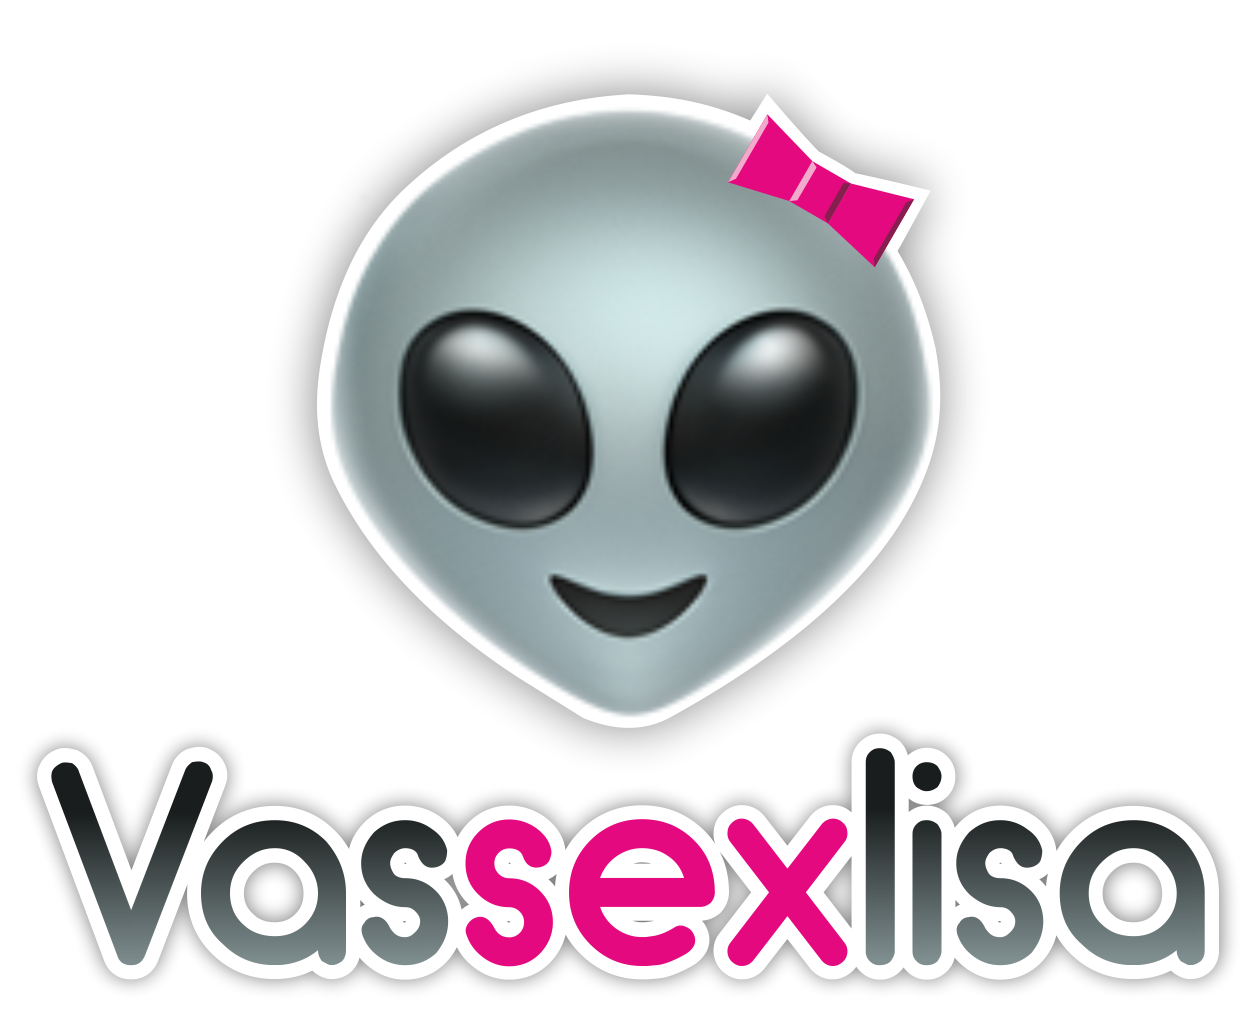 Васекслиса лого для Ютуба